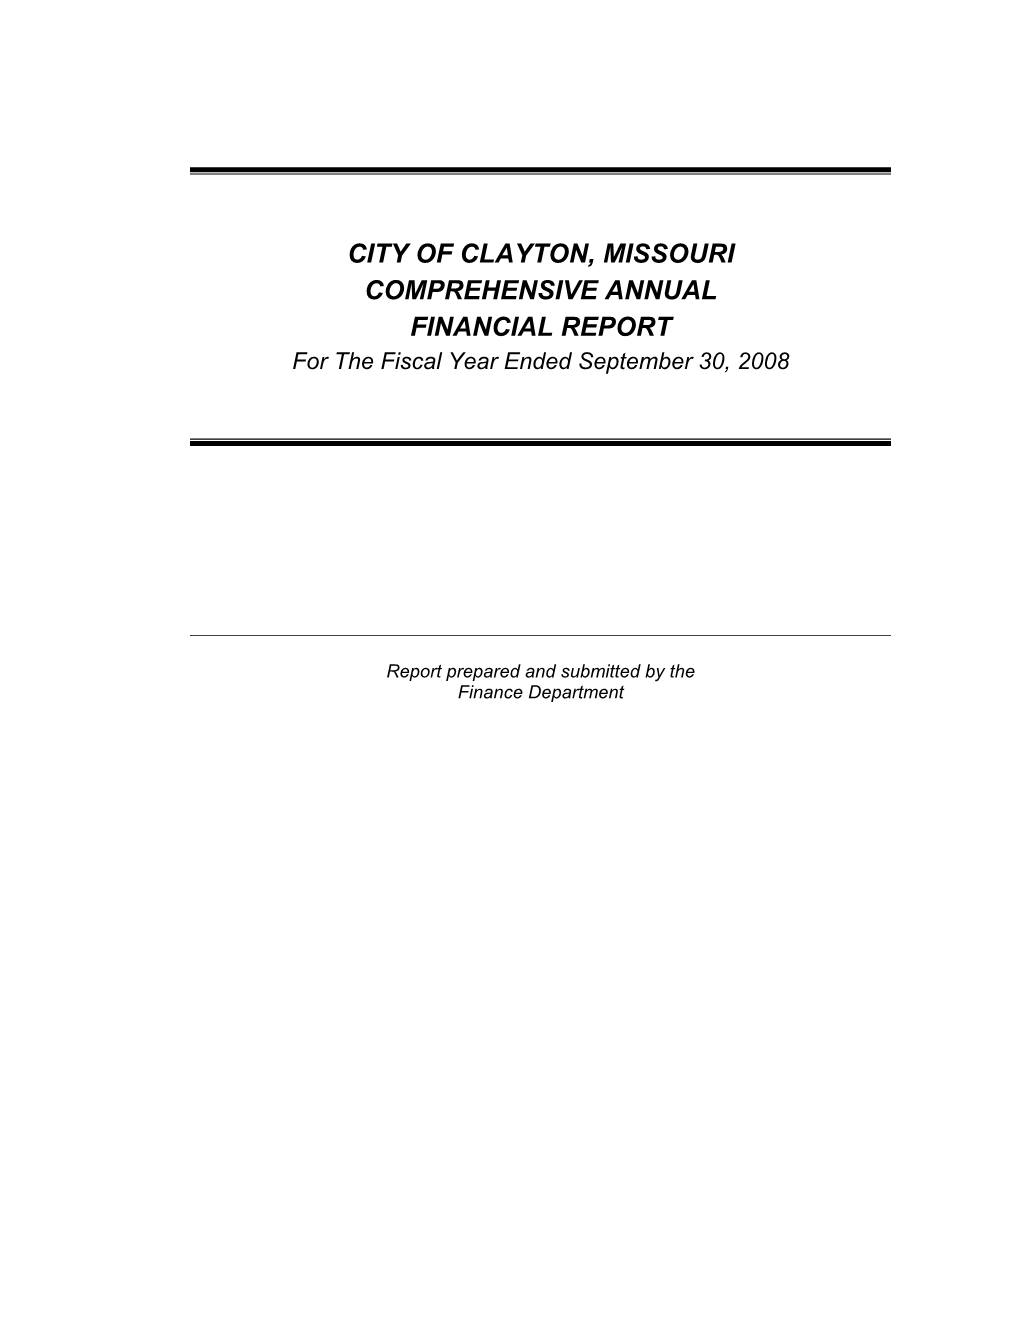 Financial Report FY 2008